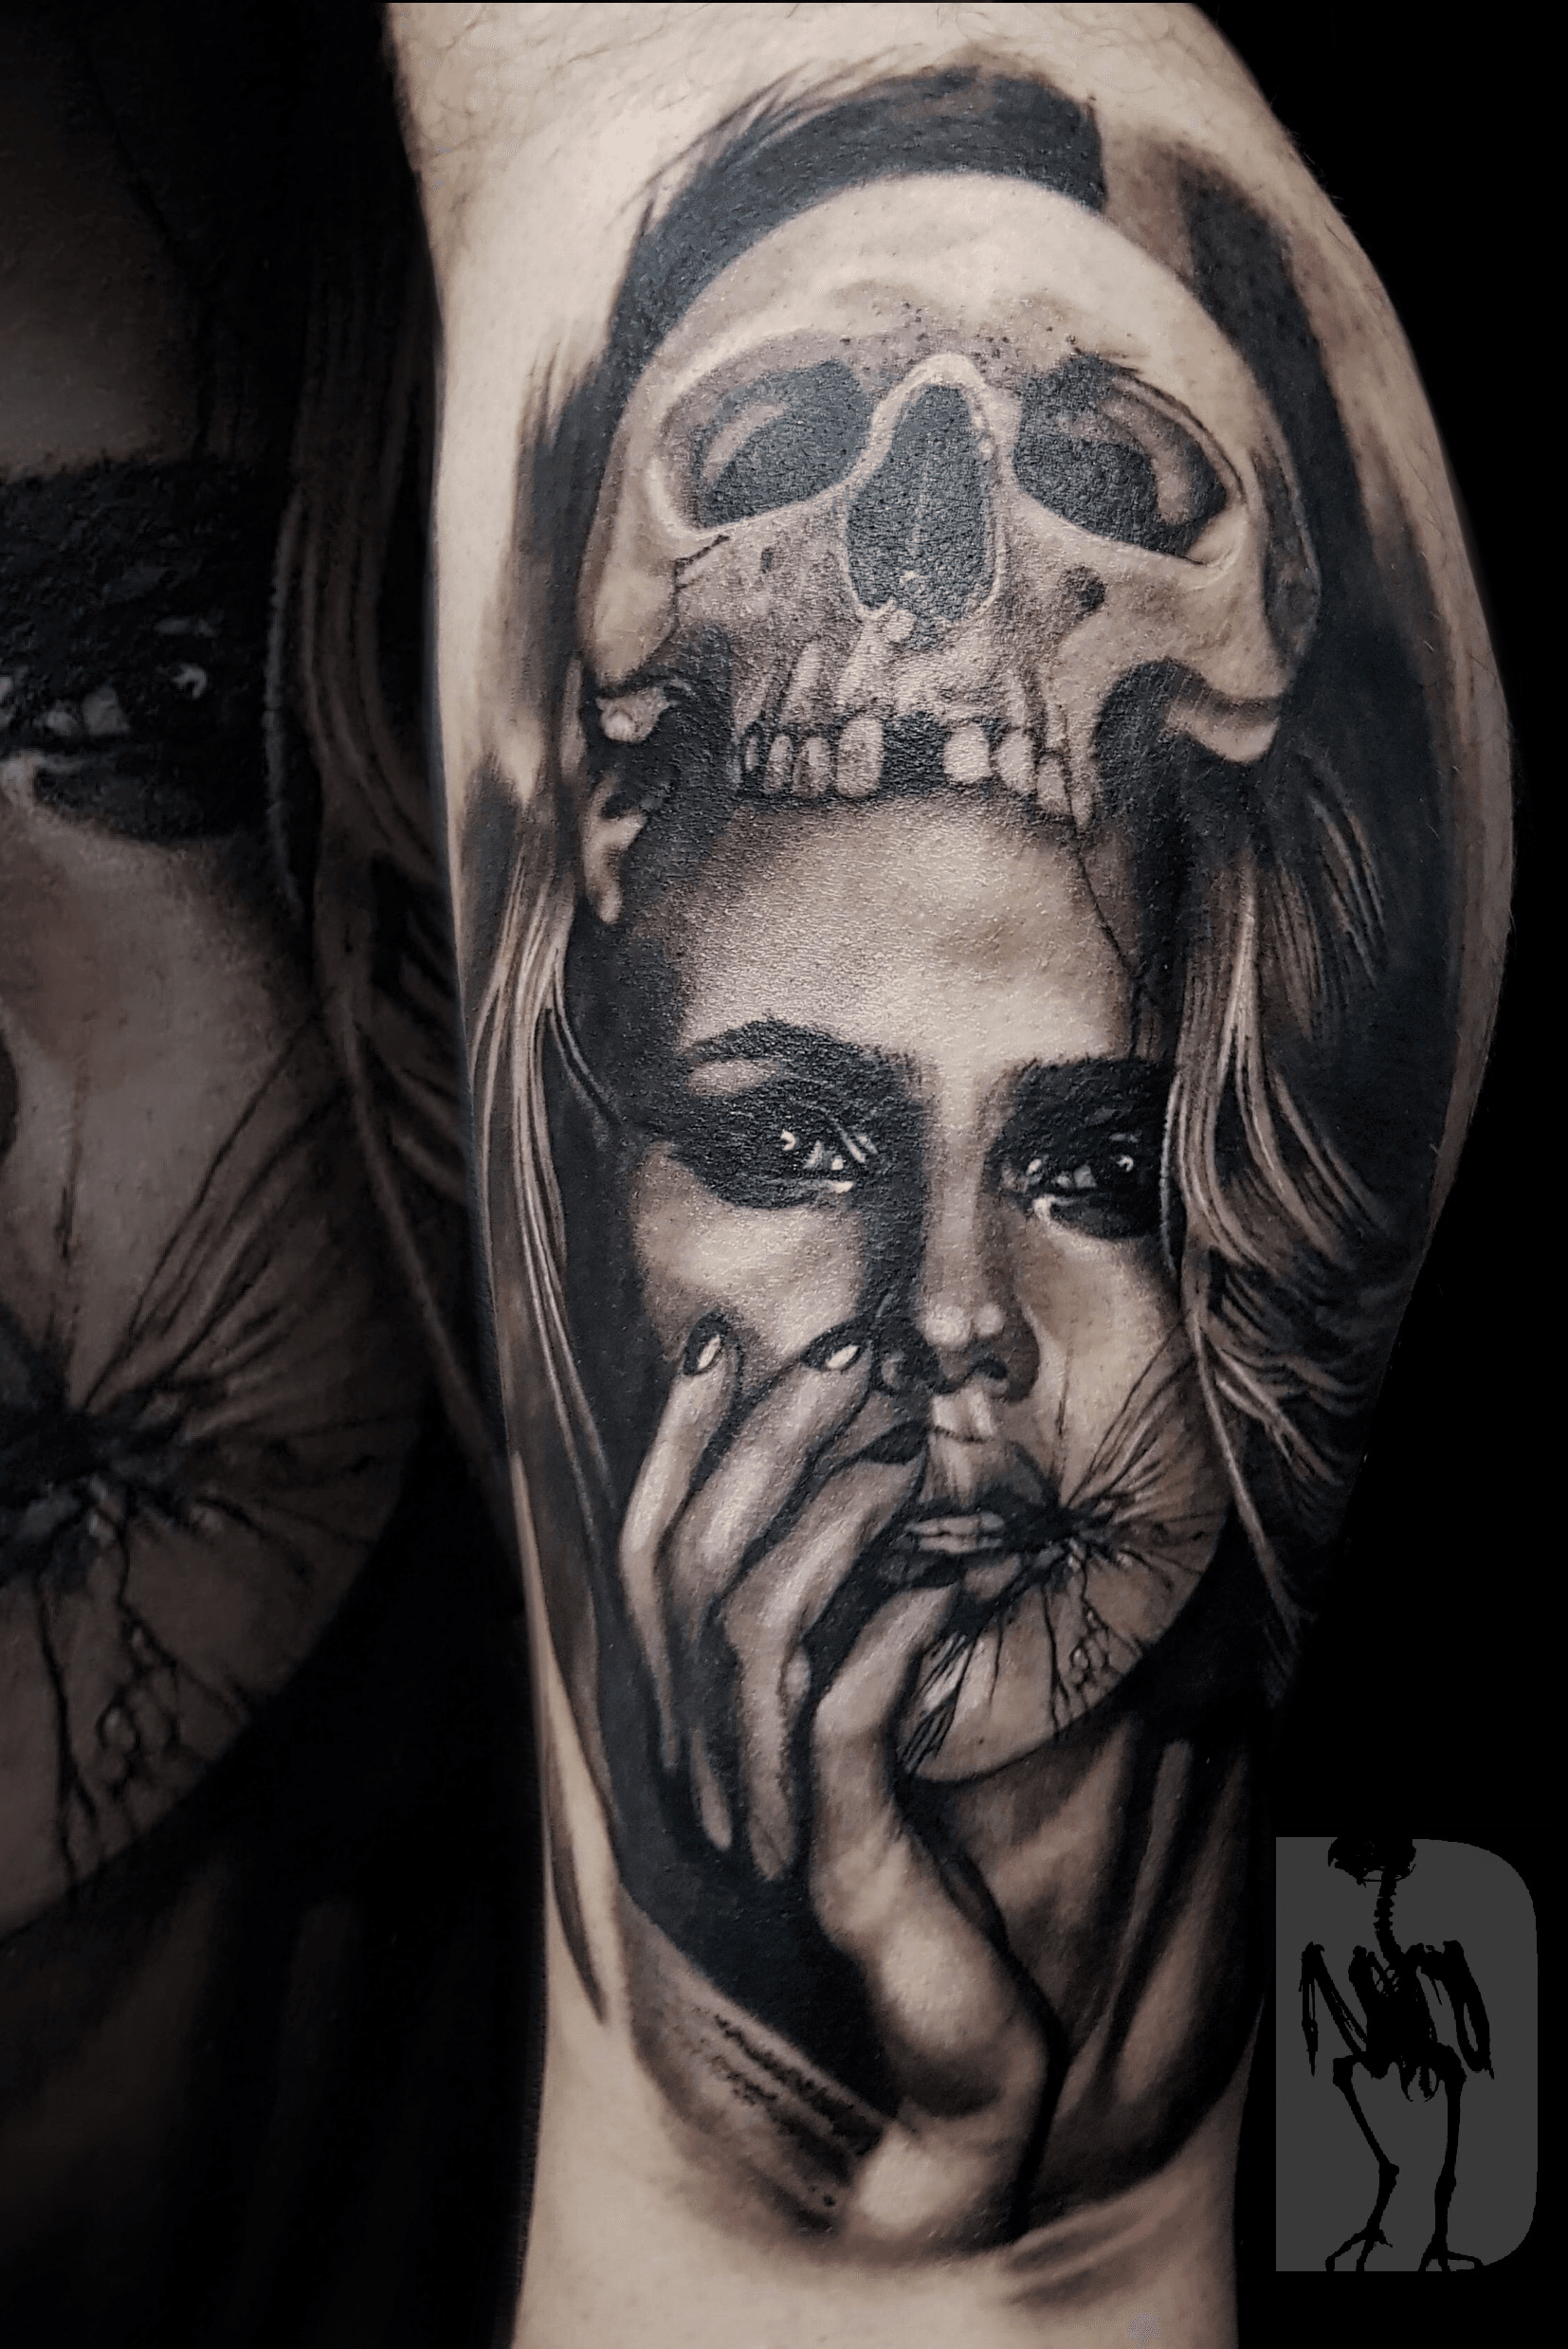 Sketch Half Female Skull Half Male Face Tattoo Idea  BlackInk